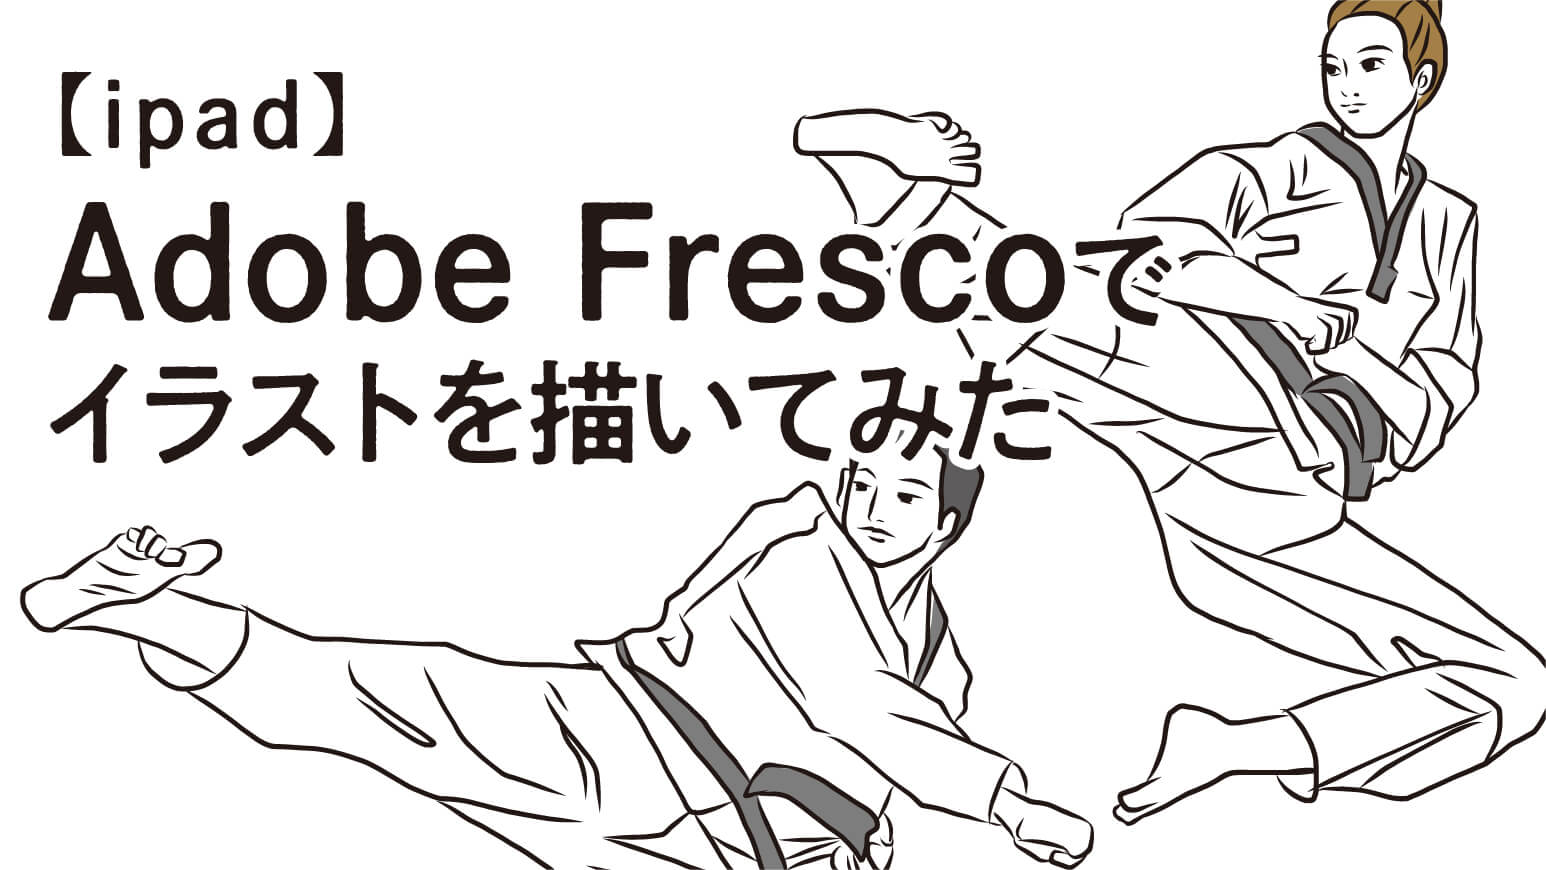 Ipad Adobe Fresco フレスコ でイラスト作成